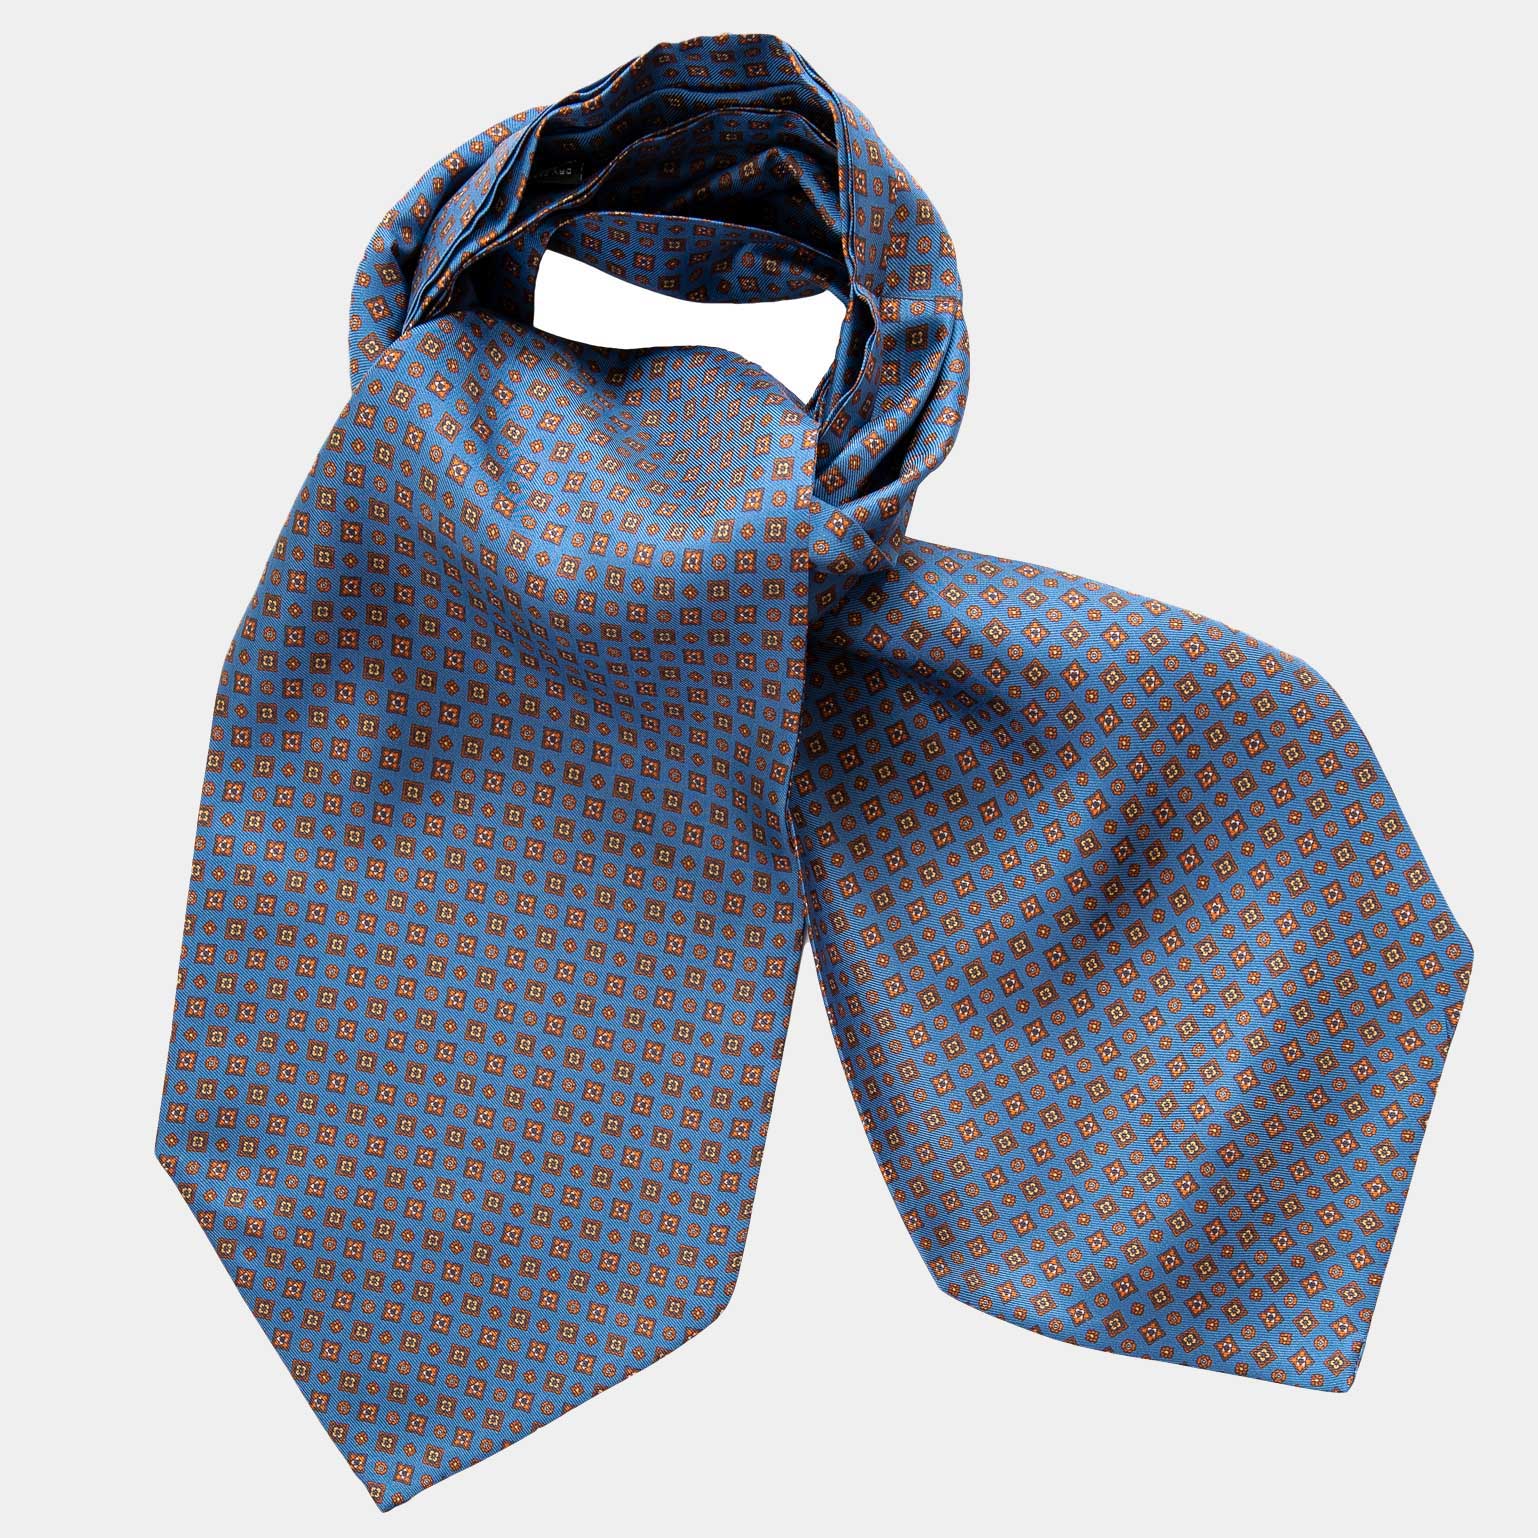 Blue Ascot Cravat Necktie - 100% Made in Italy